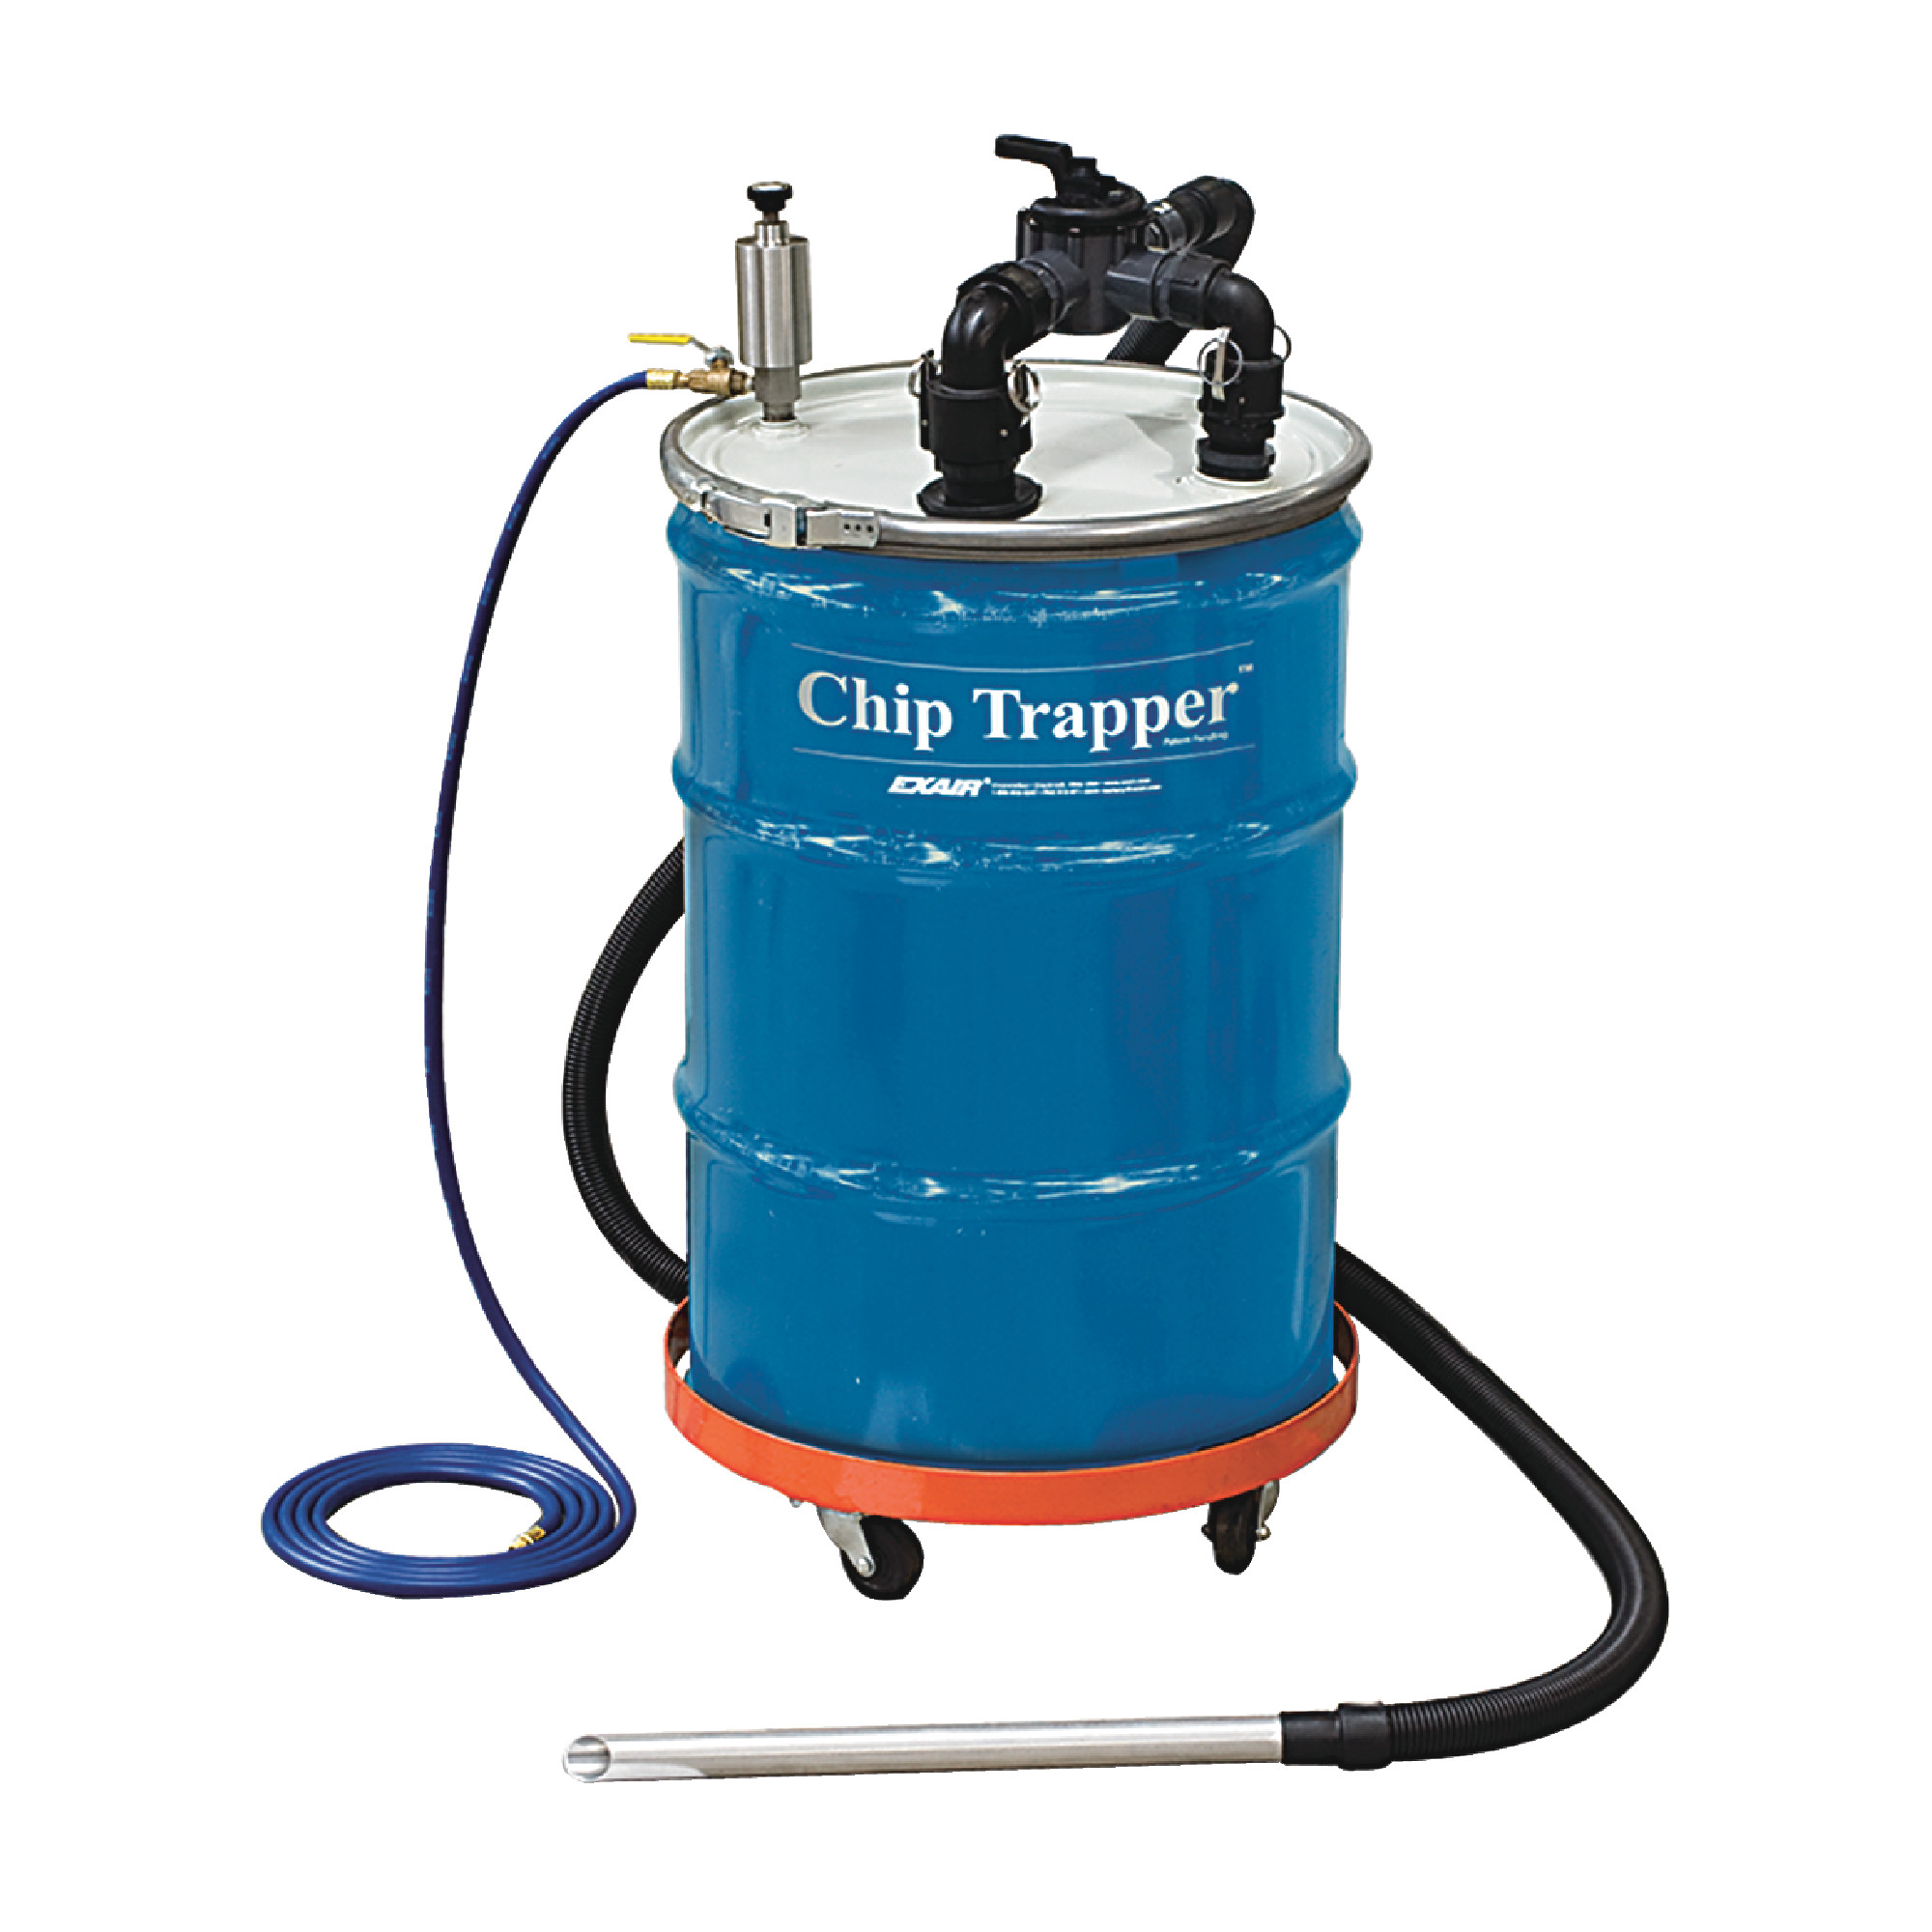 EXAIR 55 Gallon Chip Trapper - Model #:  6198